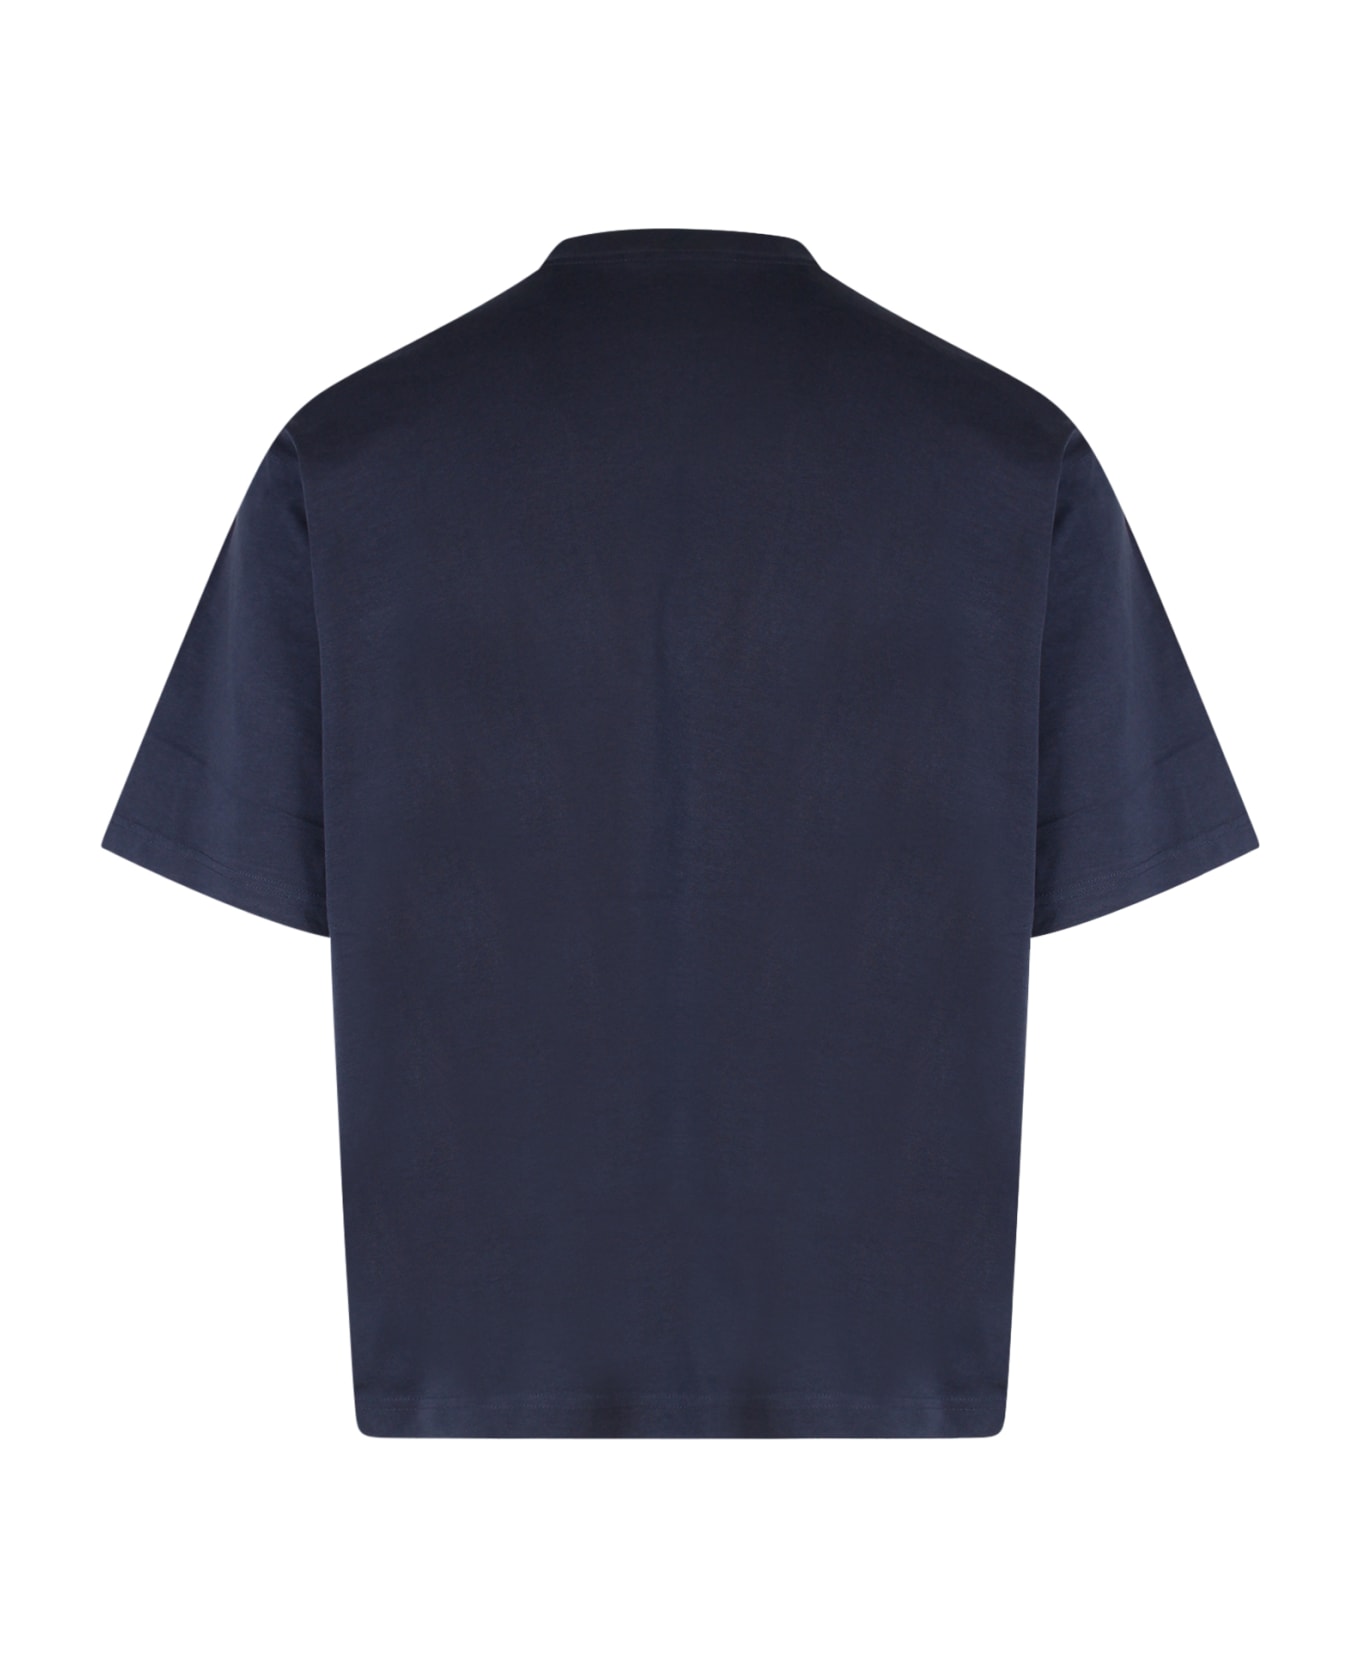 Marni T-shirt Marni - BLUE シャツ